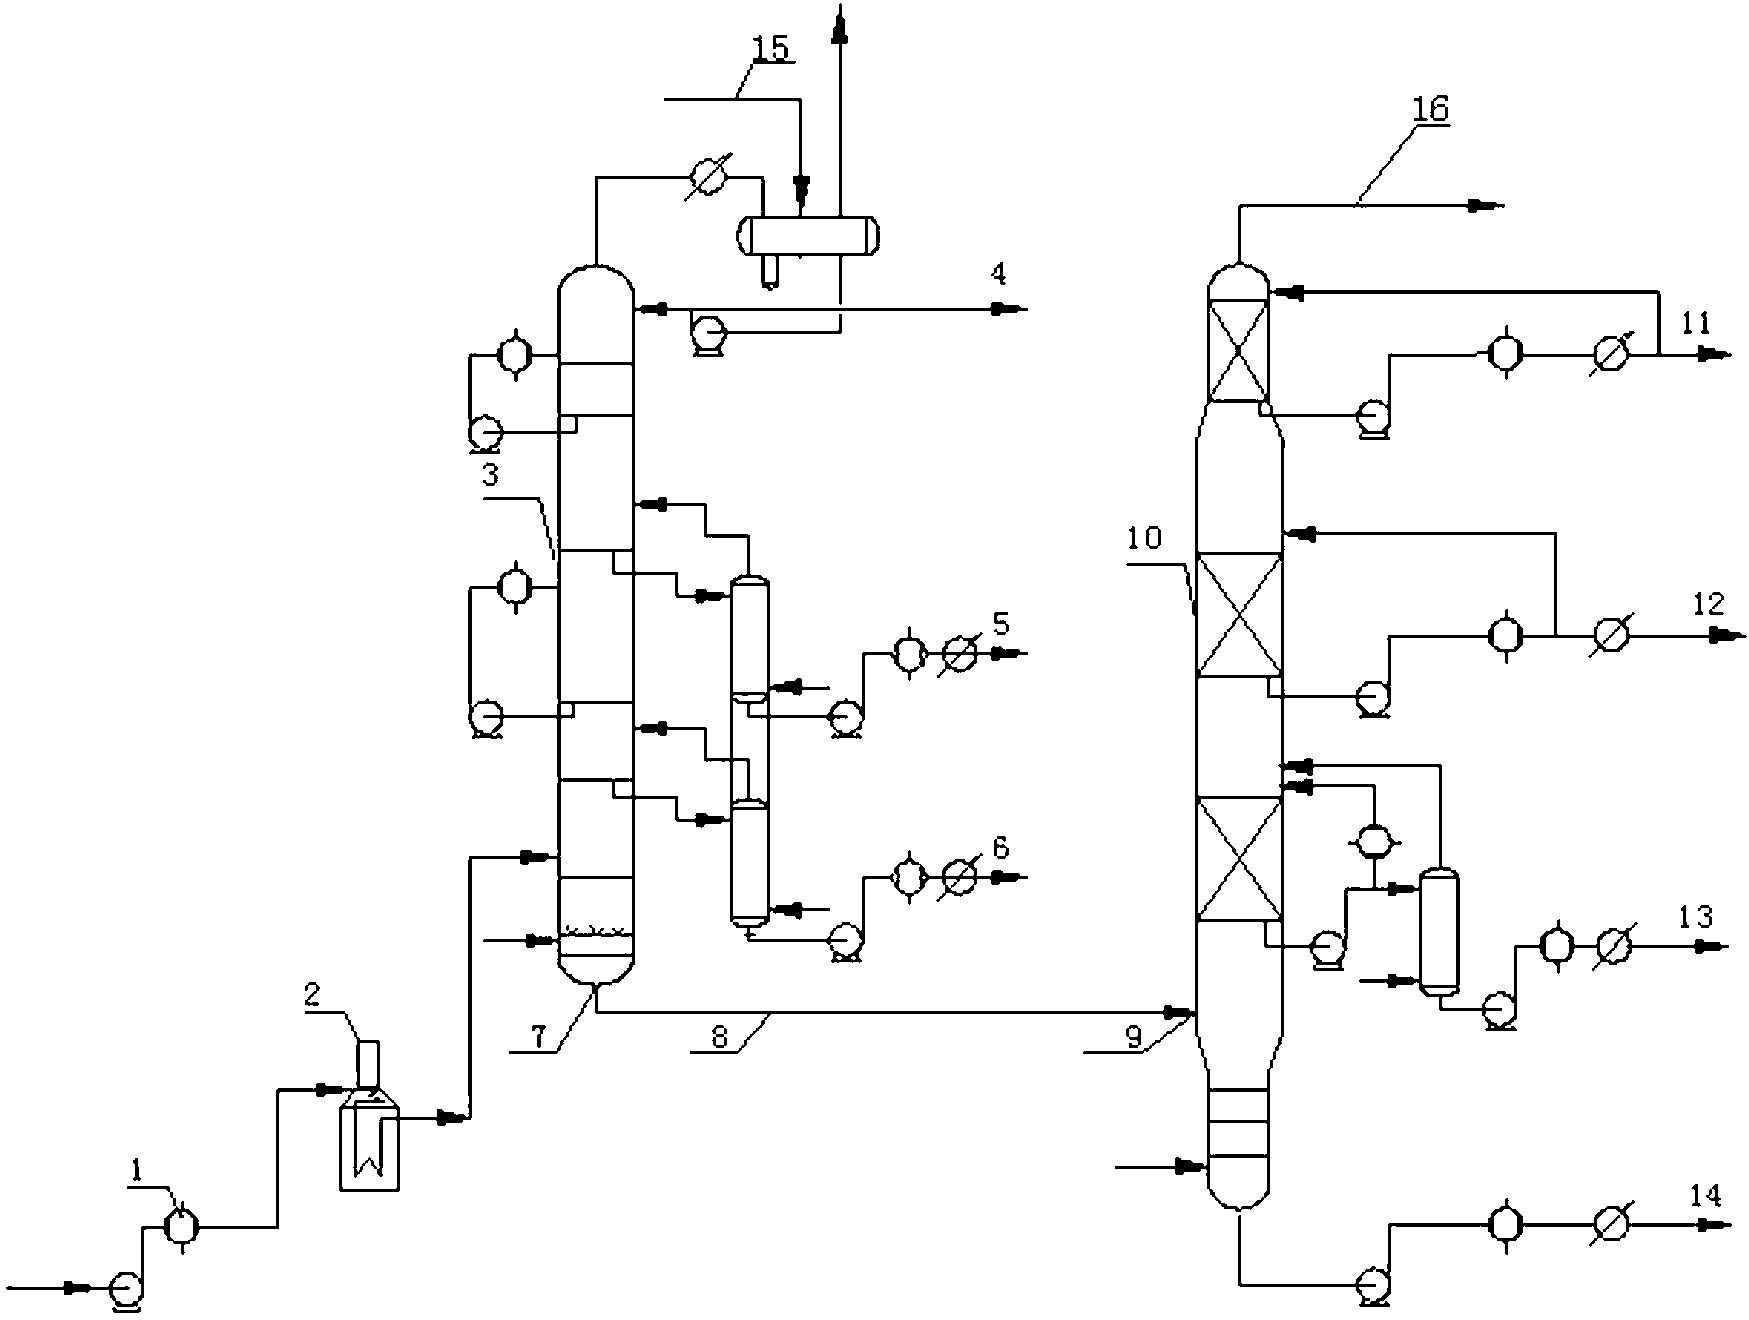 Different pressure distillation apparatus and process method